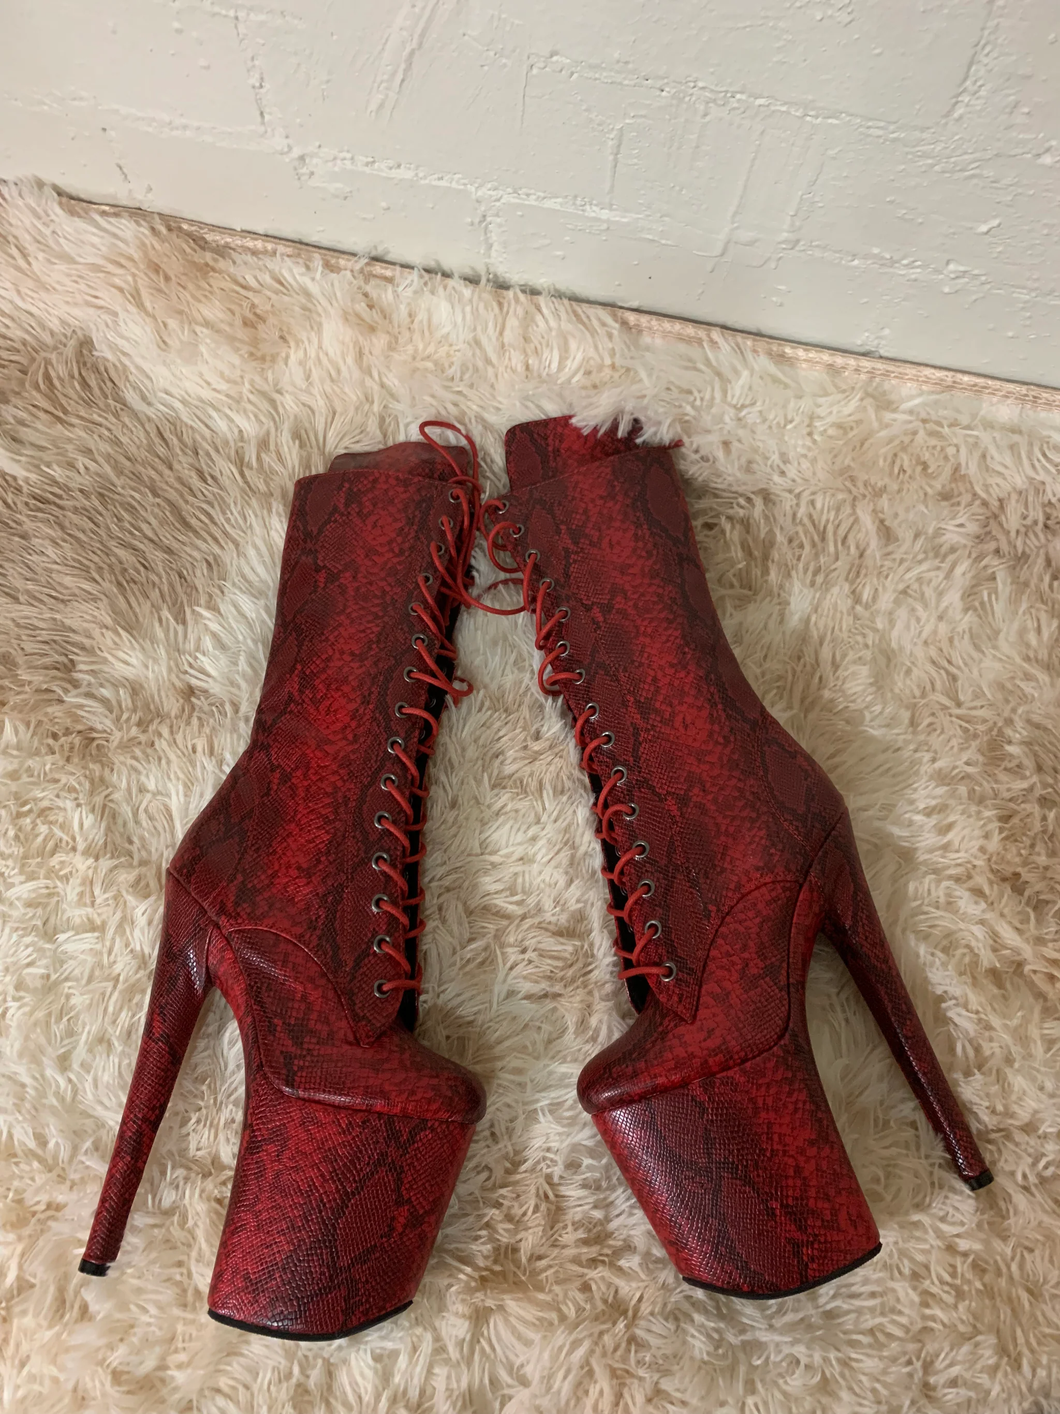 Lily Frog Heels: Medusa Red - 8 inch heels - mid calf